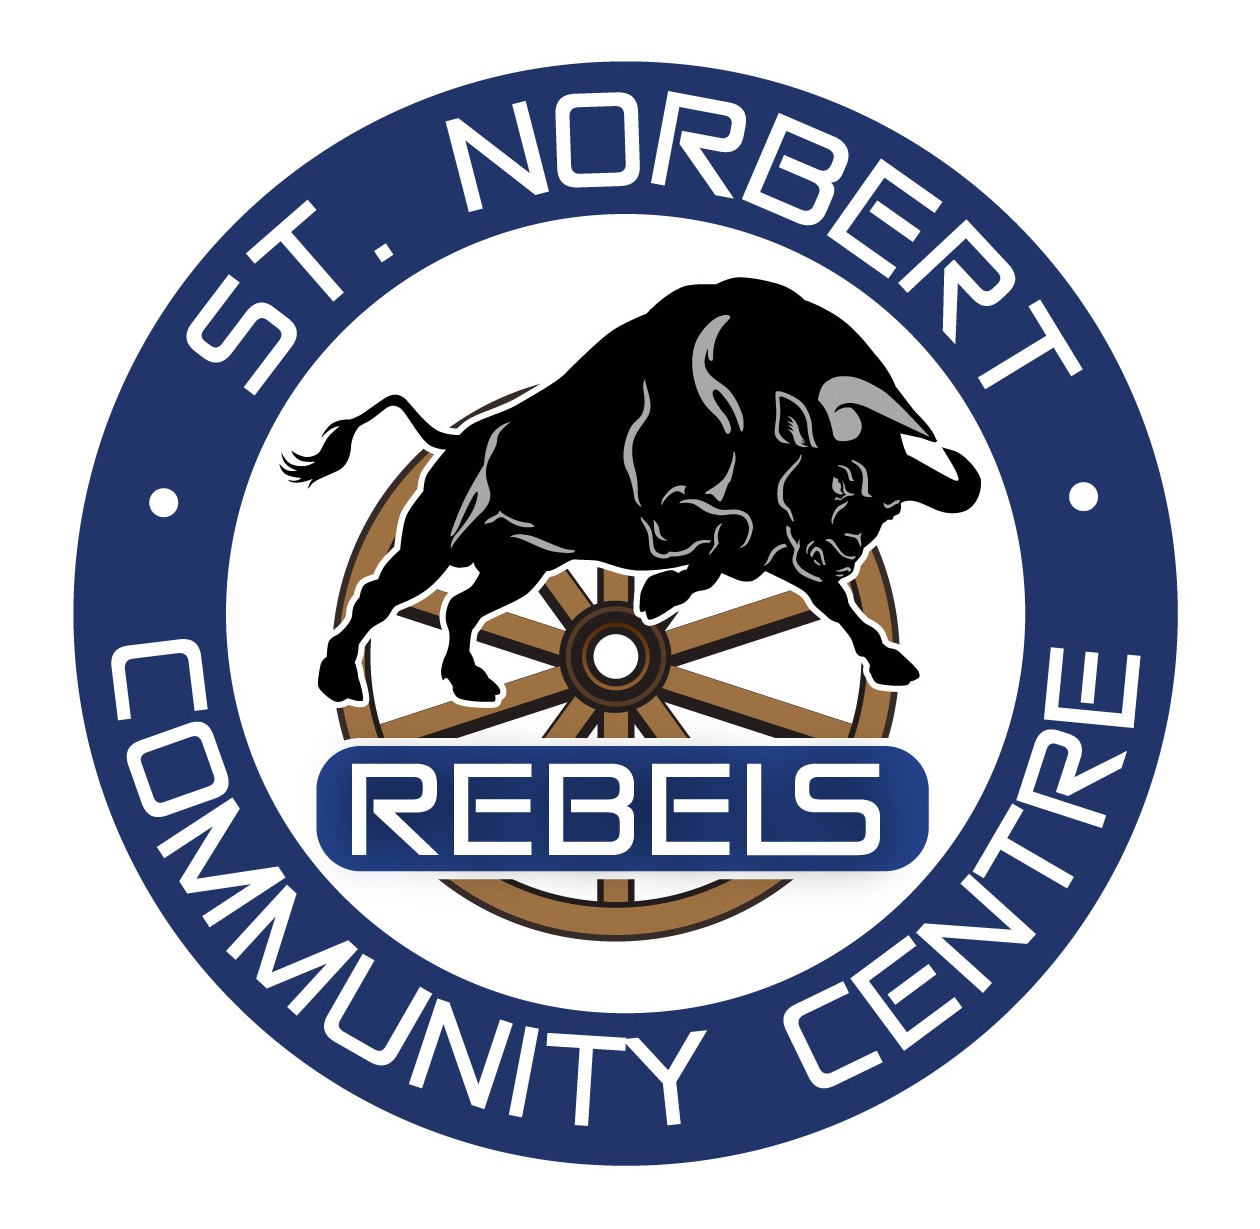 St. Norbert Community Club